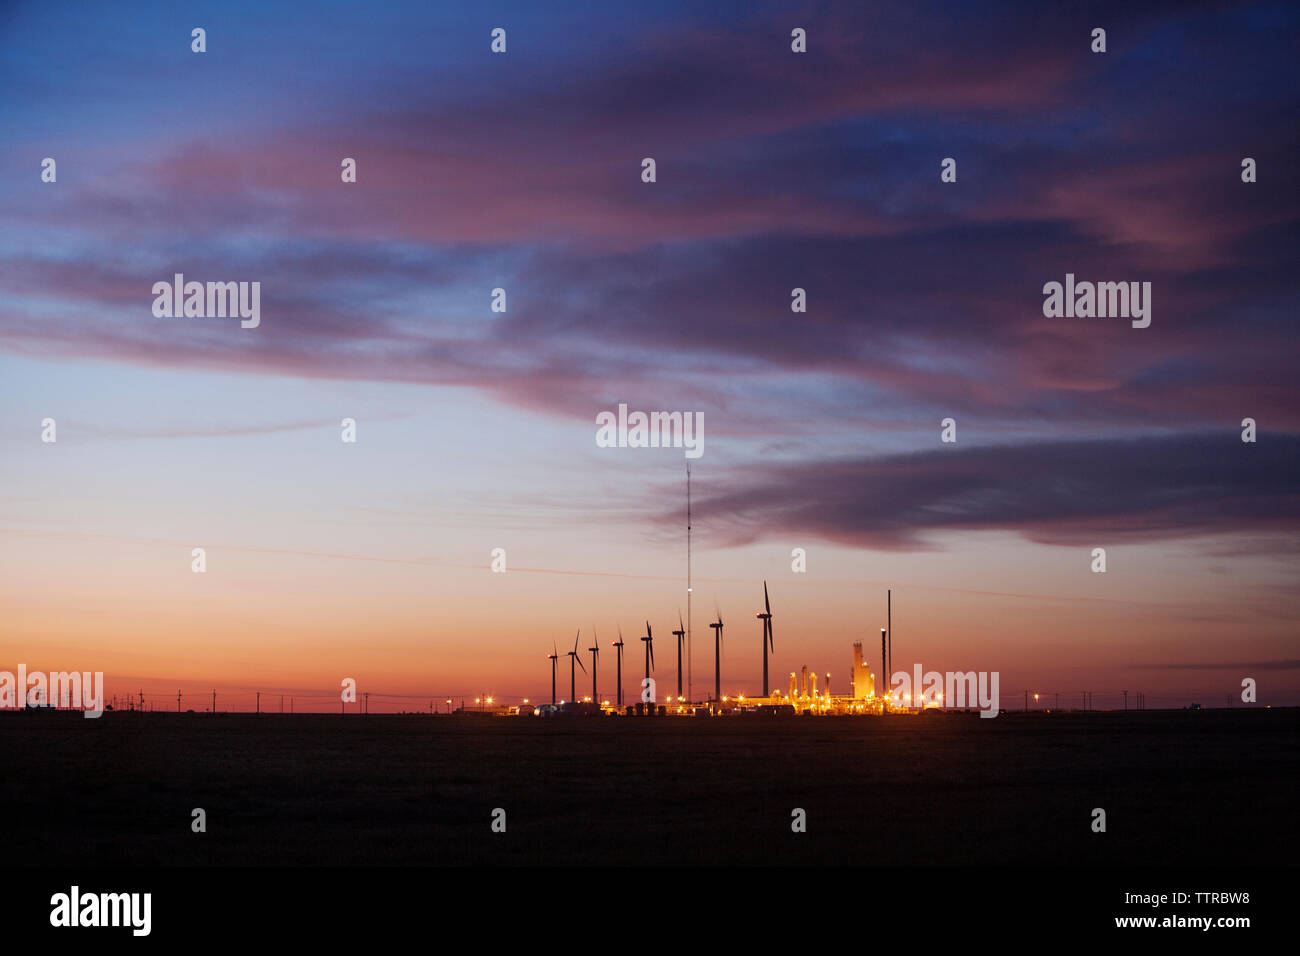 Illuminated power plant against cloudy sky at dusk Stock Photo